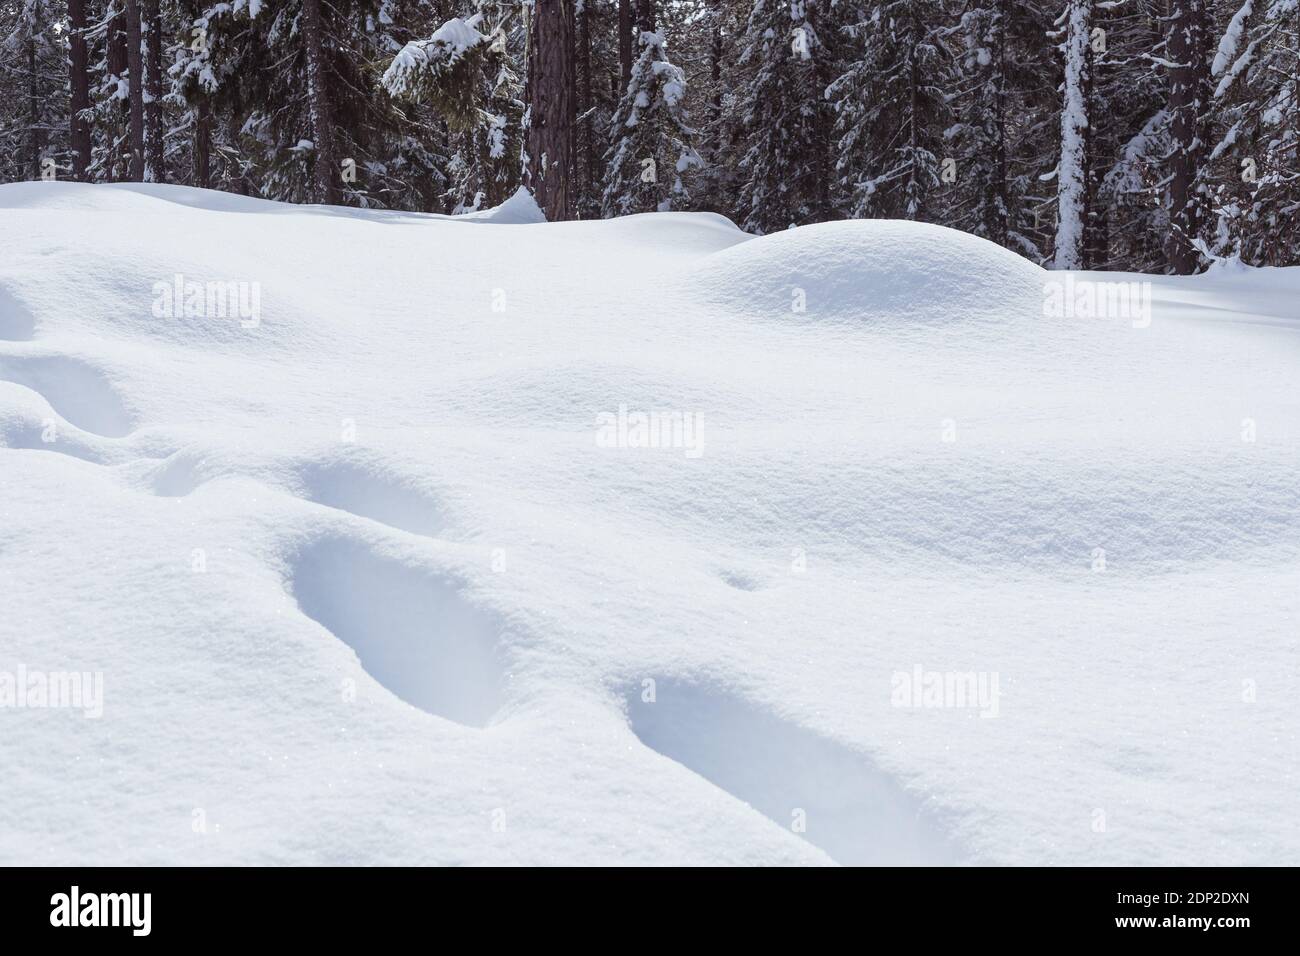 Deep Tracks in Freshly Fallen Snow in Forest Stock Photo